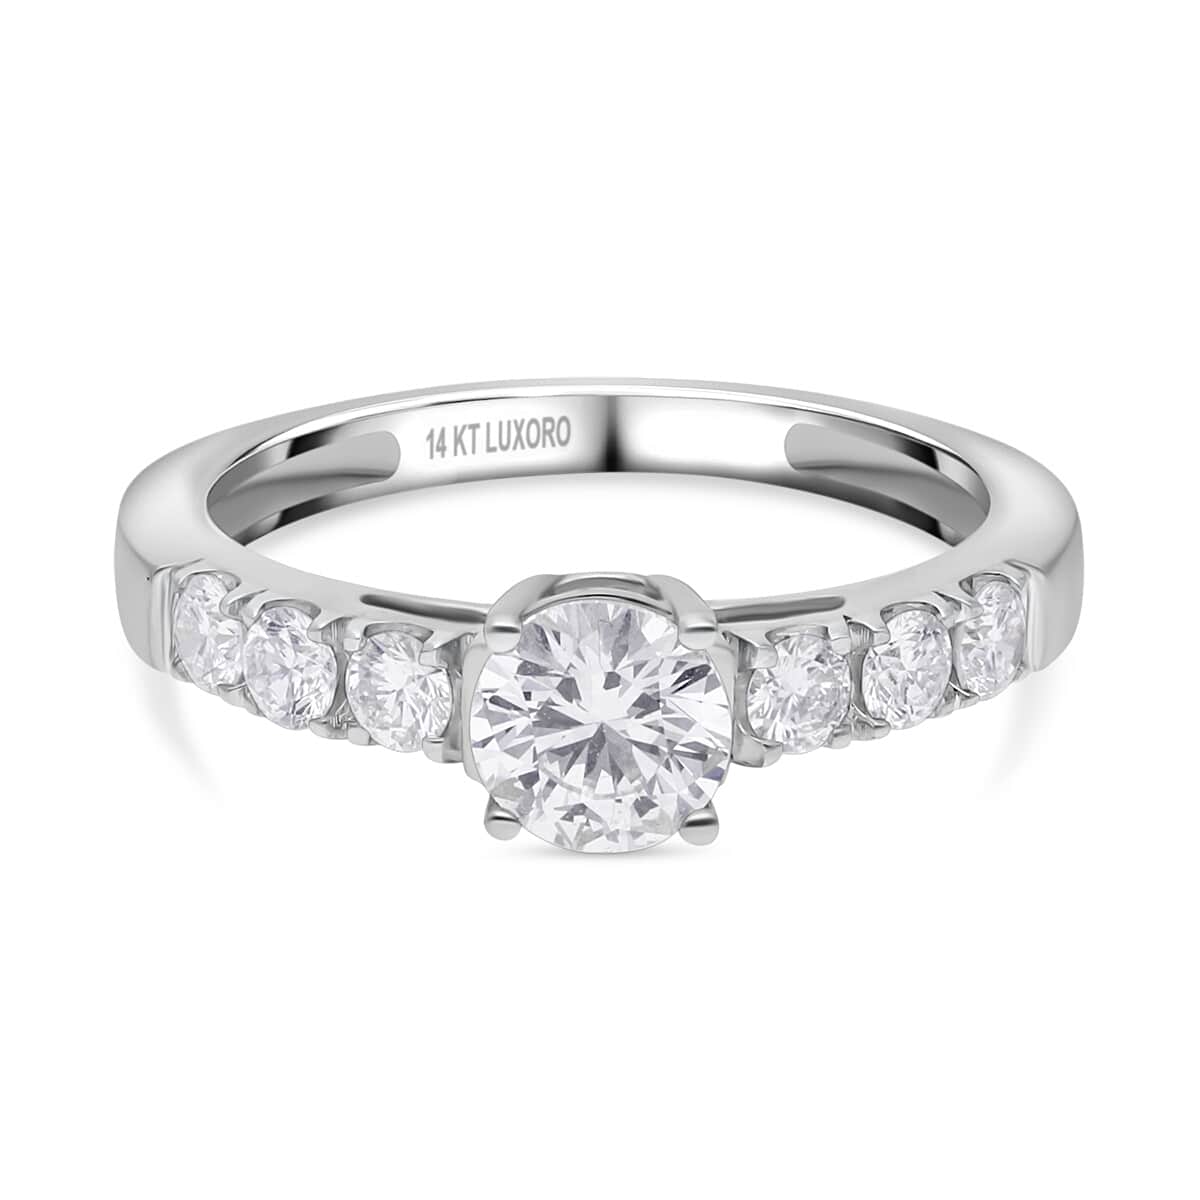 Luxoro 14K White Gold Lab Grown Diamond G-H VS Ring (Size 9.0) 1.15 ctw image number 0